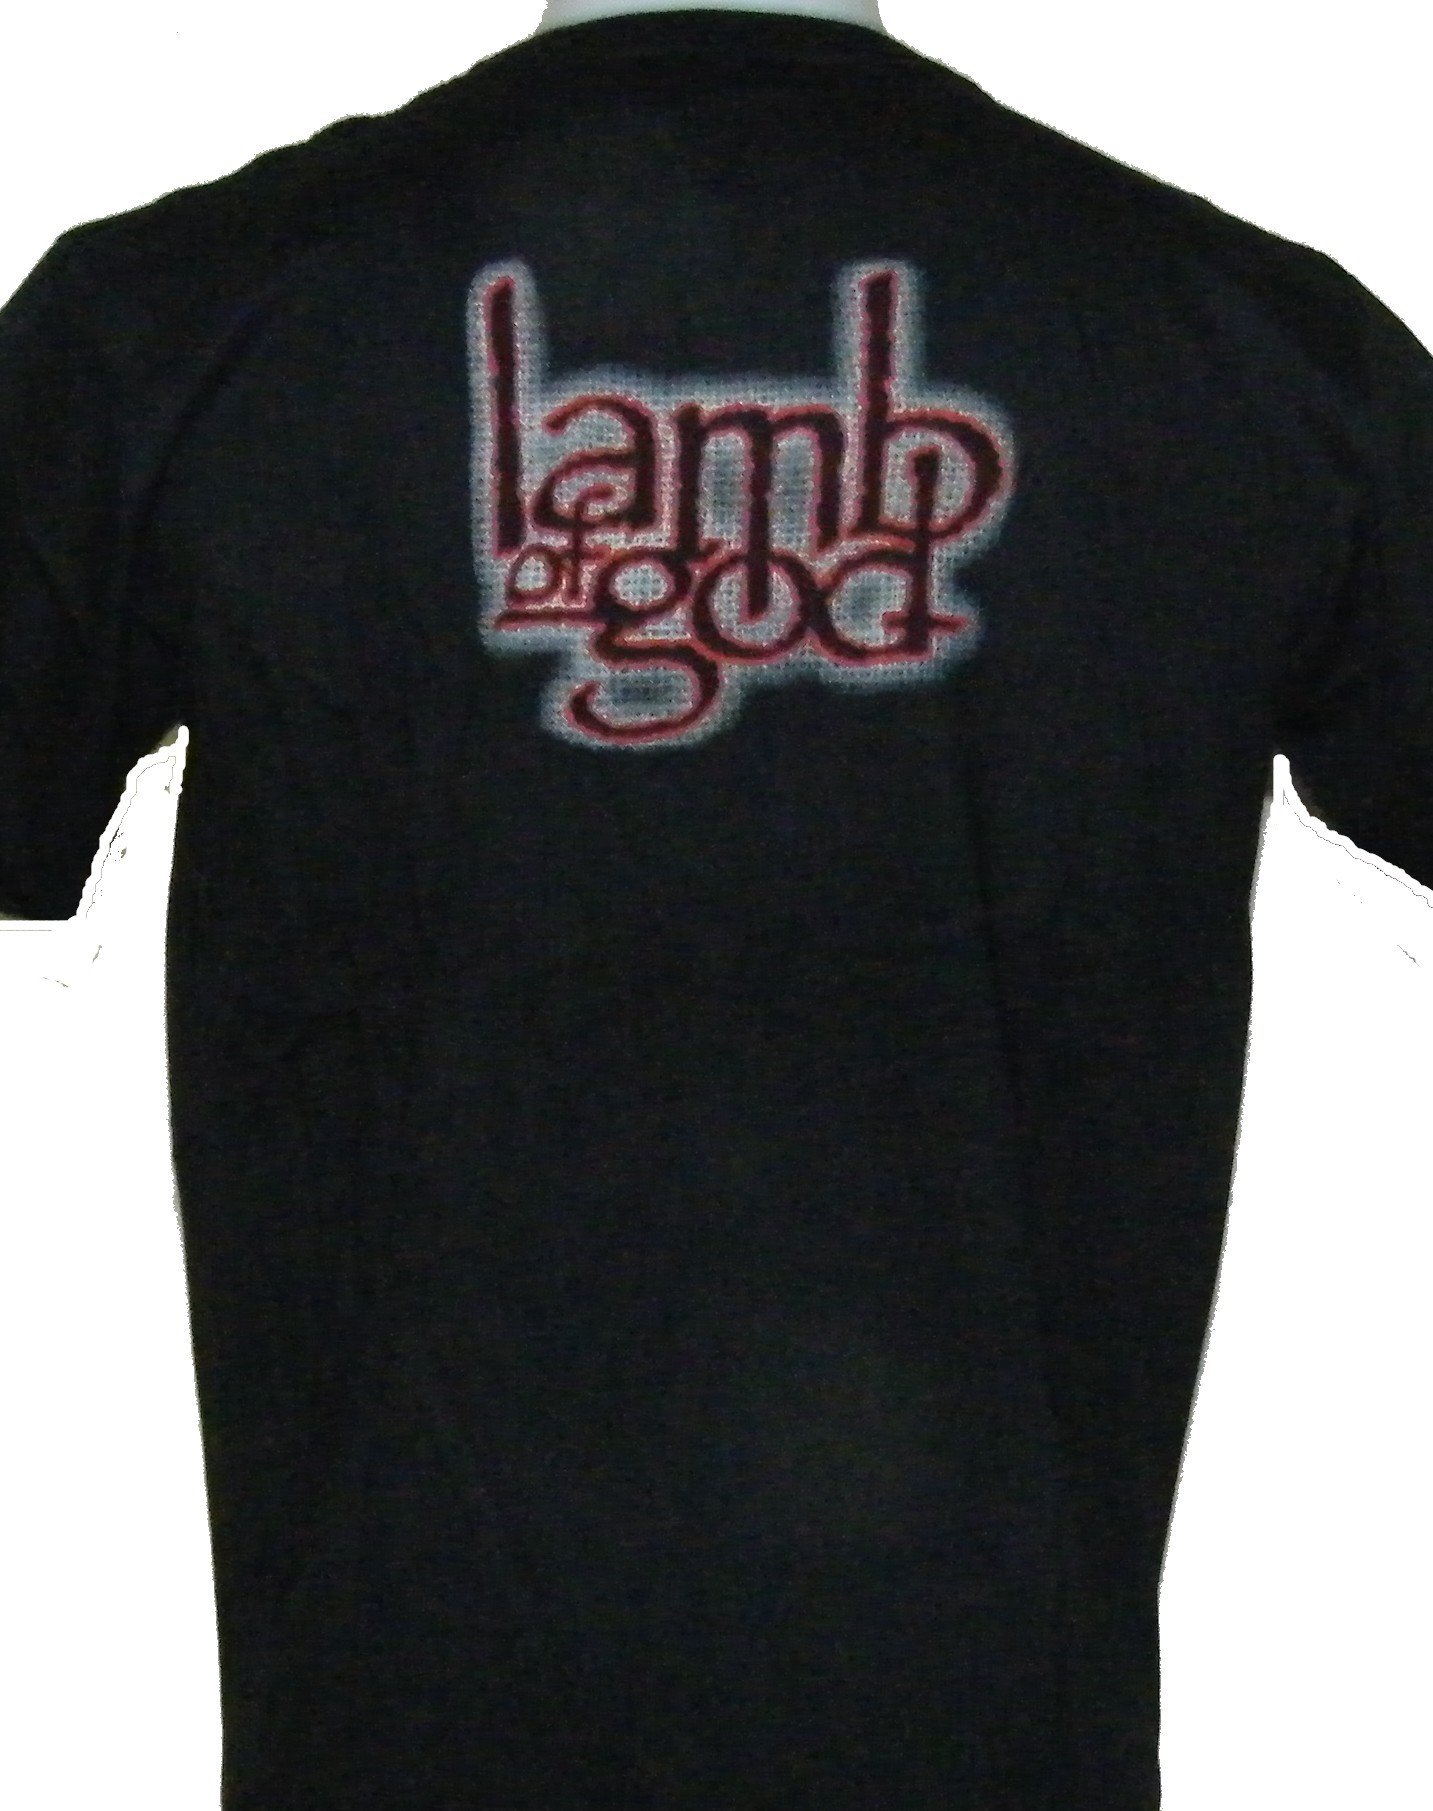 LAMB OF GOD PURE AMERICAN METAL  MUSIC T-SHIRT SHORT SLEEVE COTTON BLACK ADULT